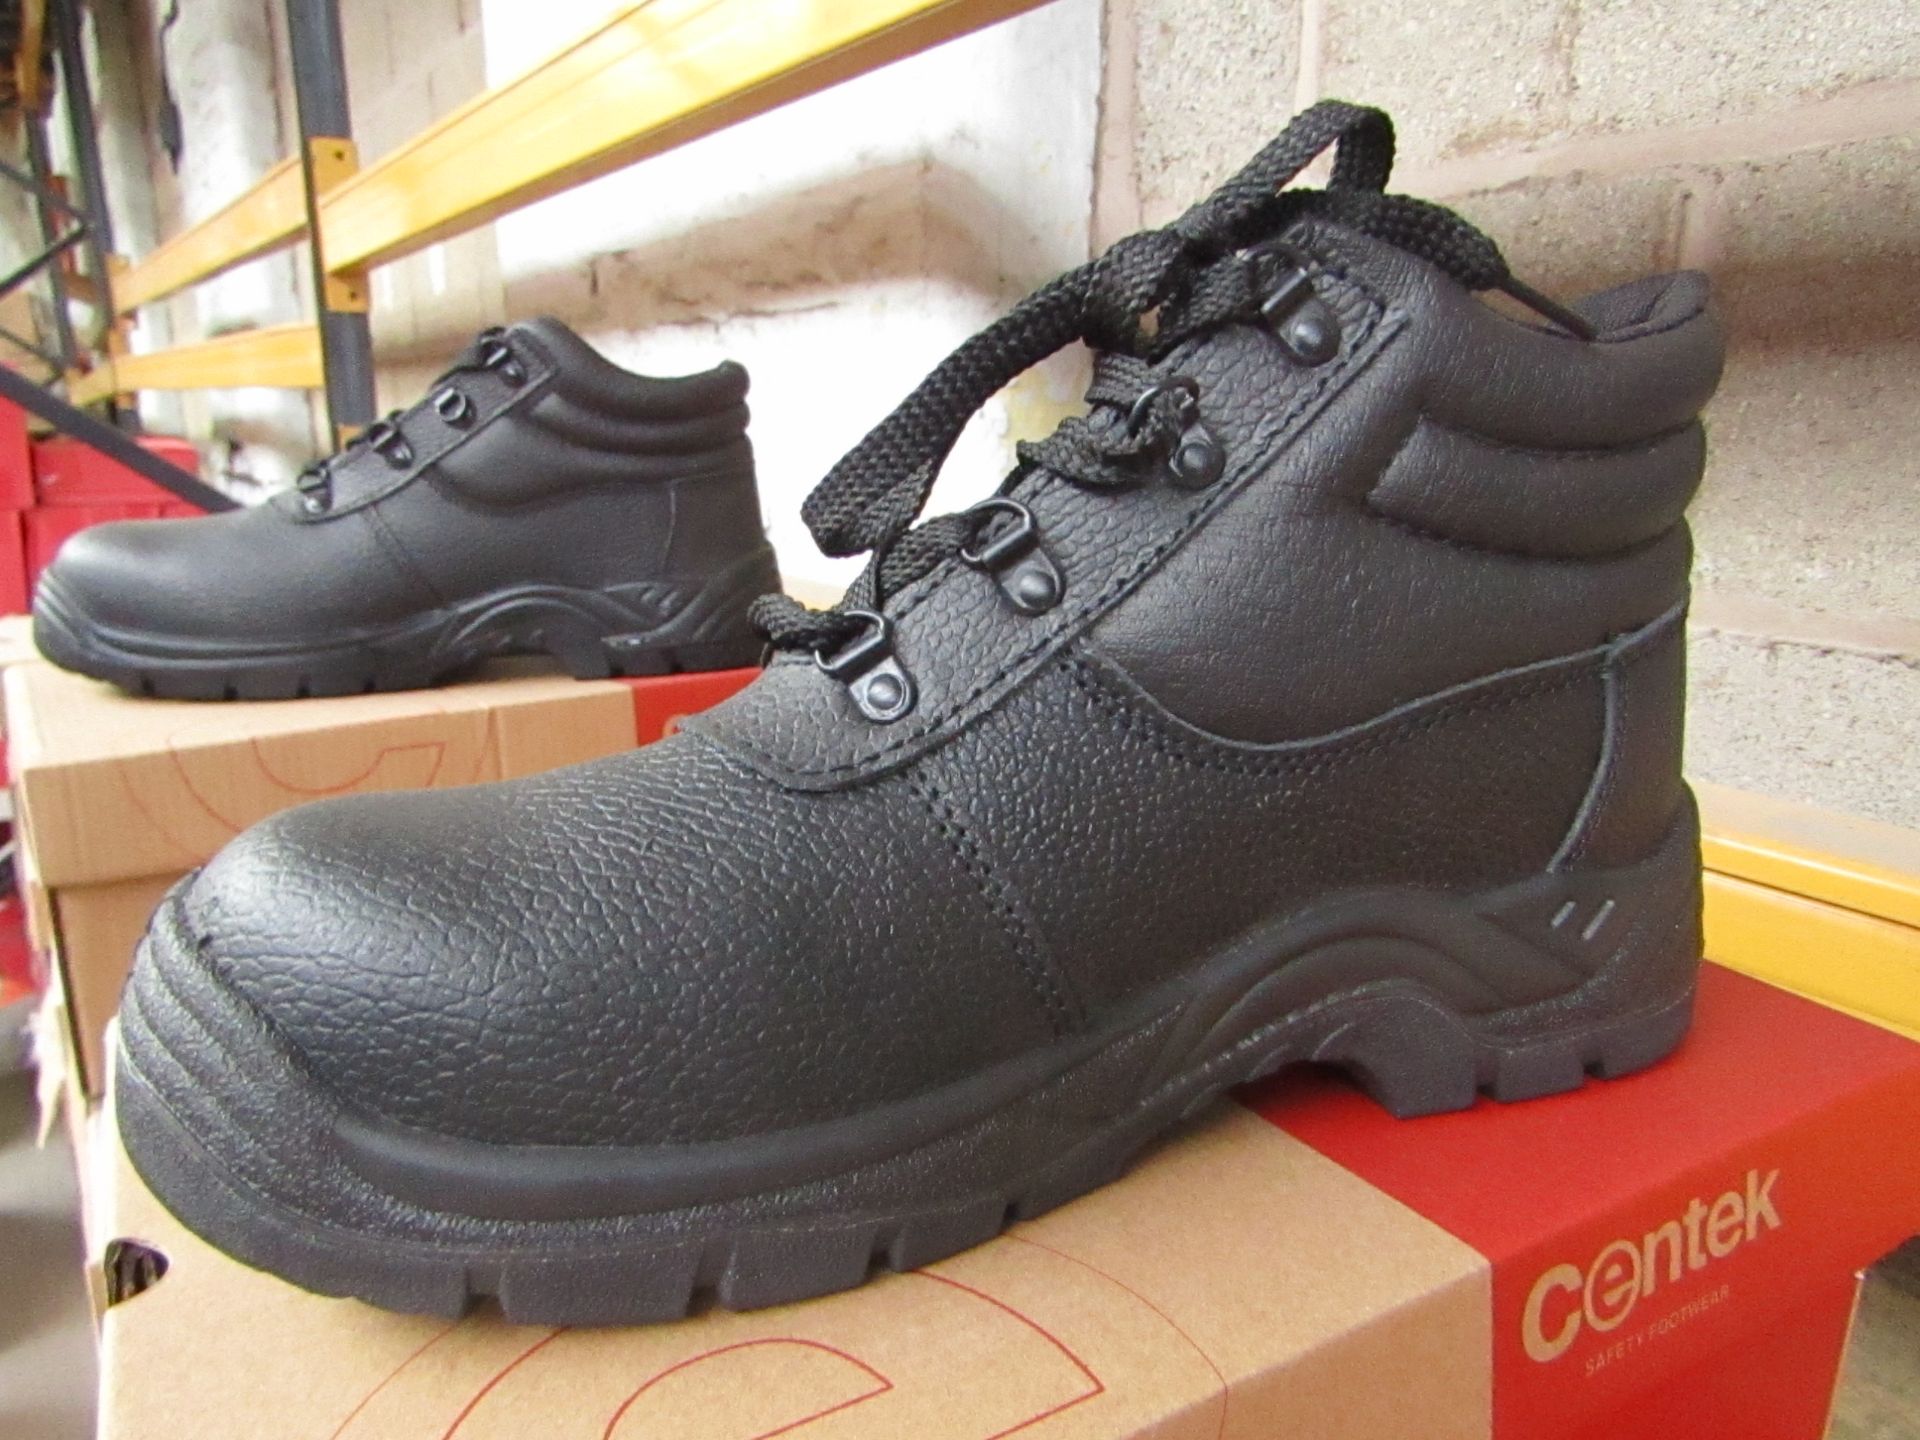 Centek Black Steel Toe Cap Boot size 11 New & Boxed.